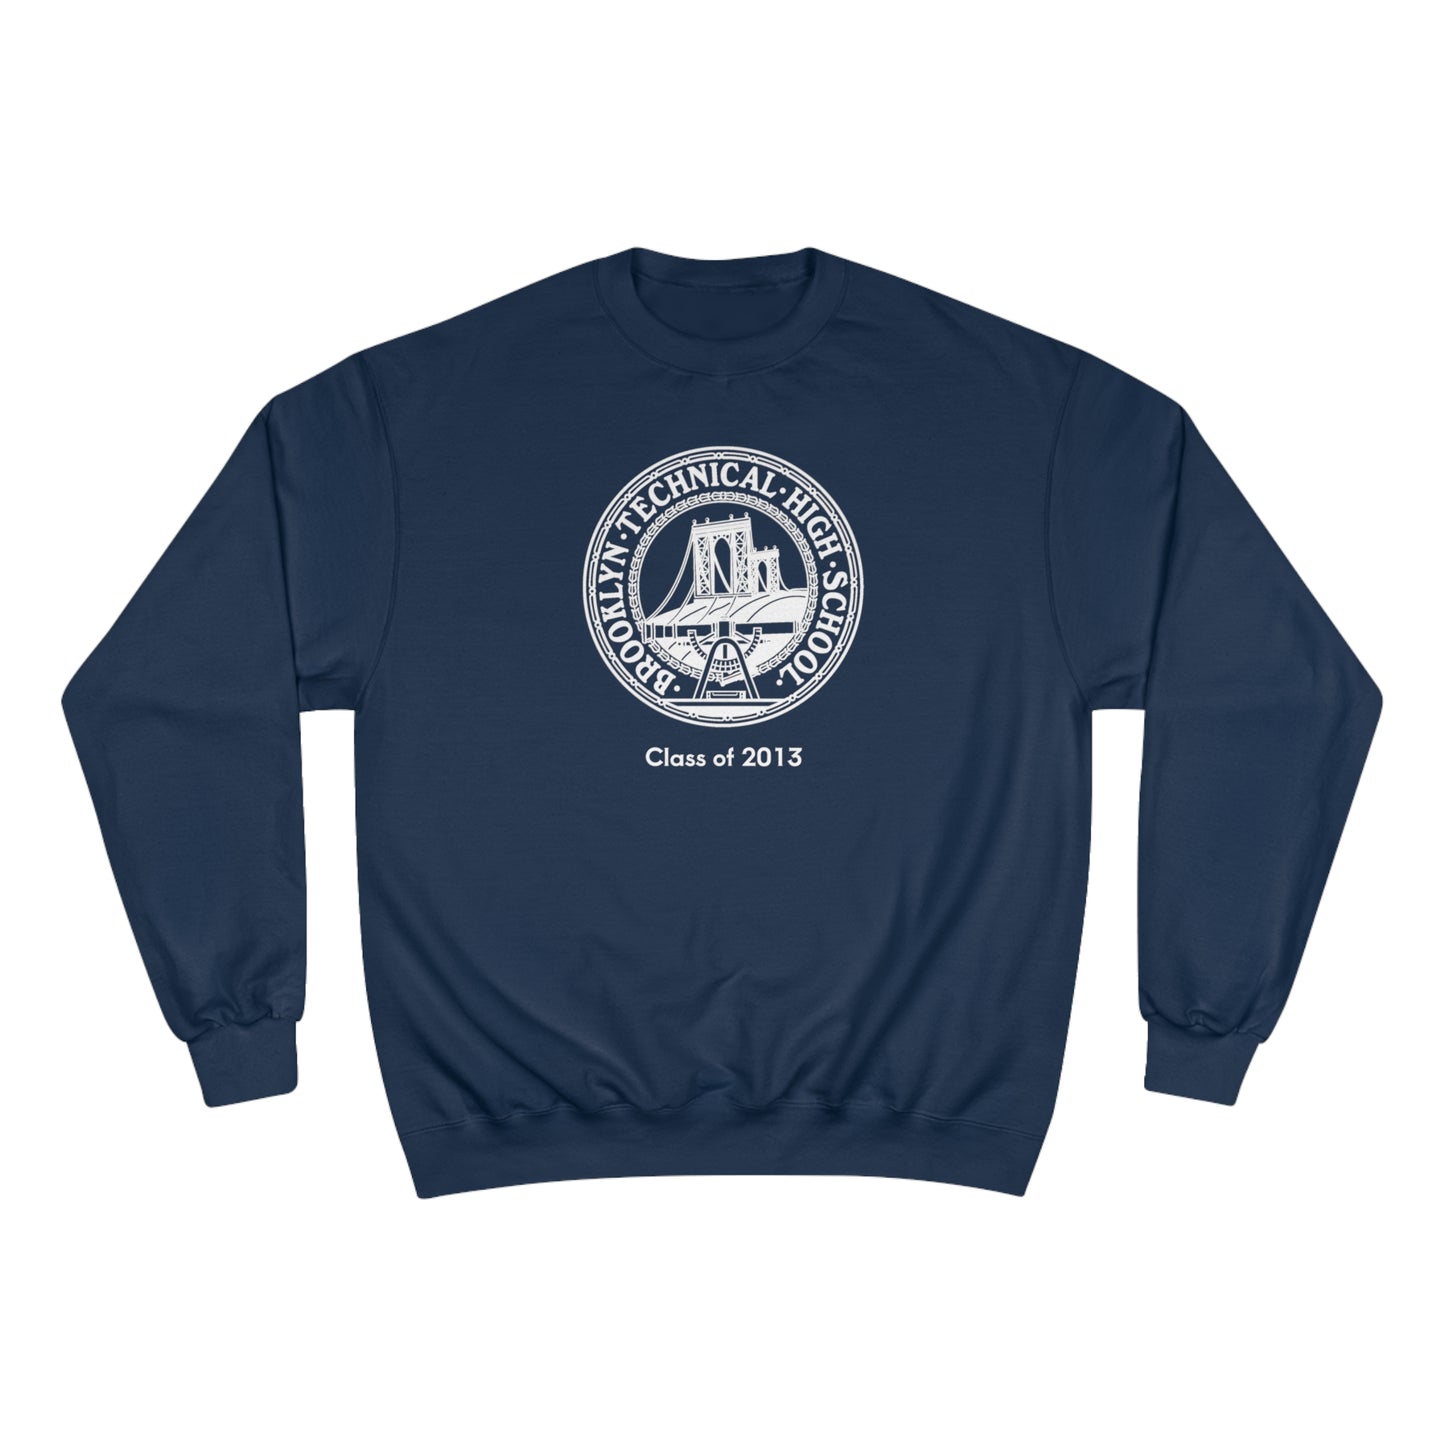 Classic Tech Seal - Champion Crewneck Sweatshirt - Class Of 2013